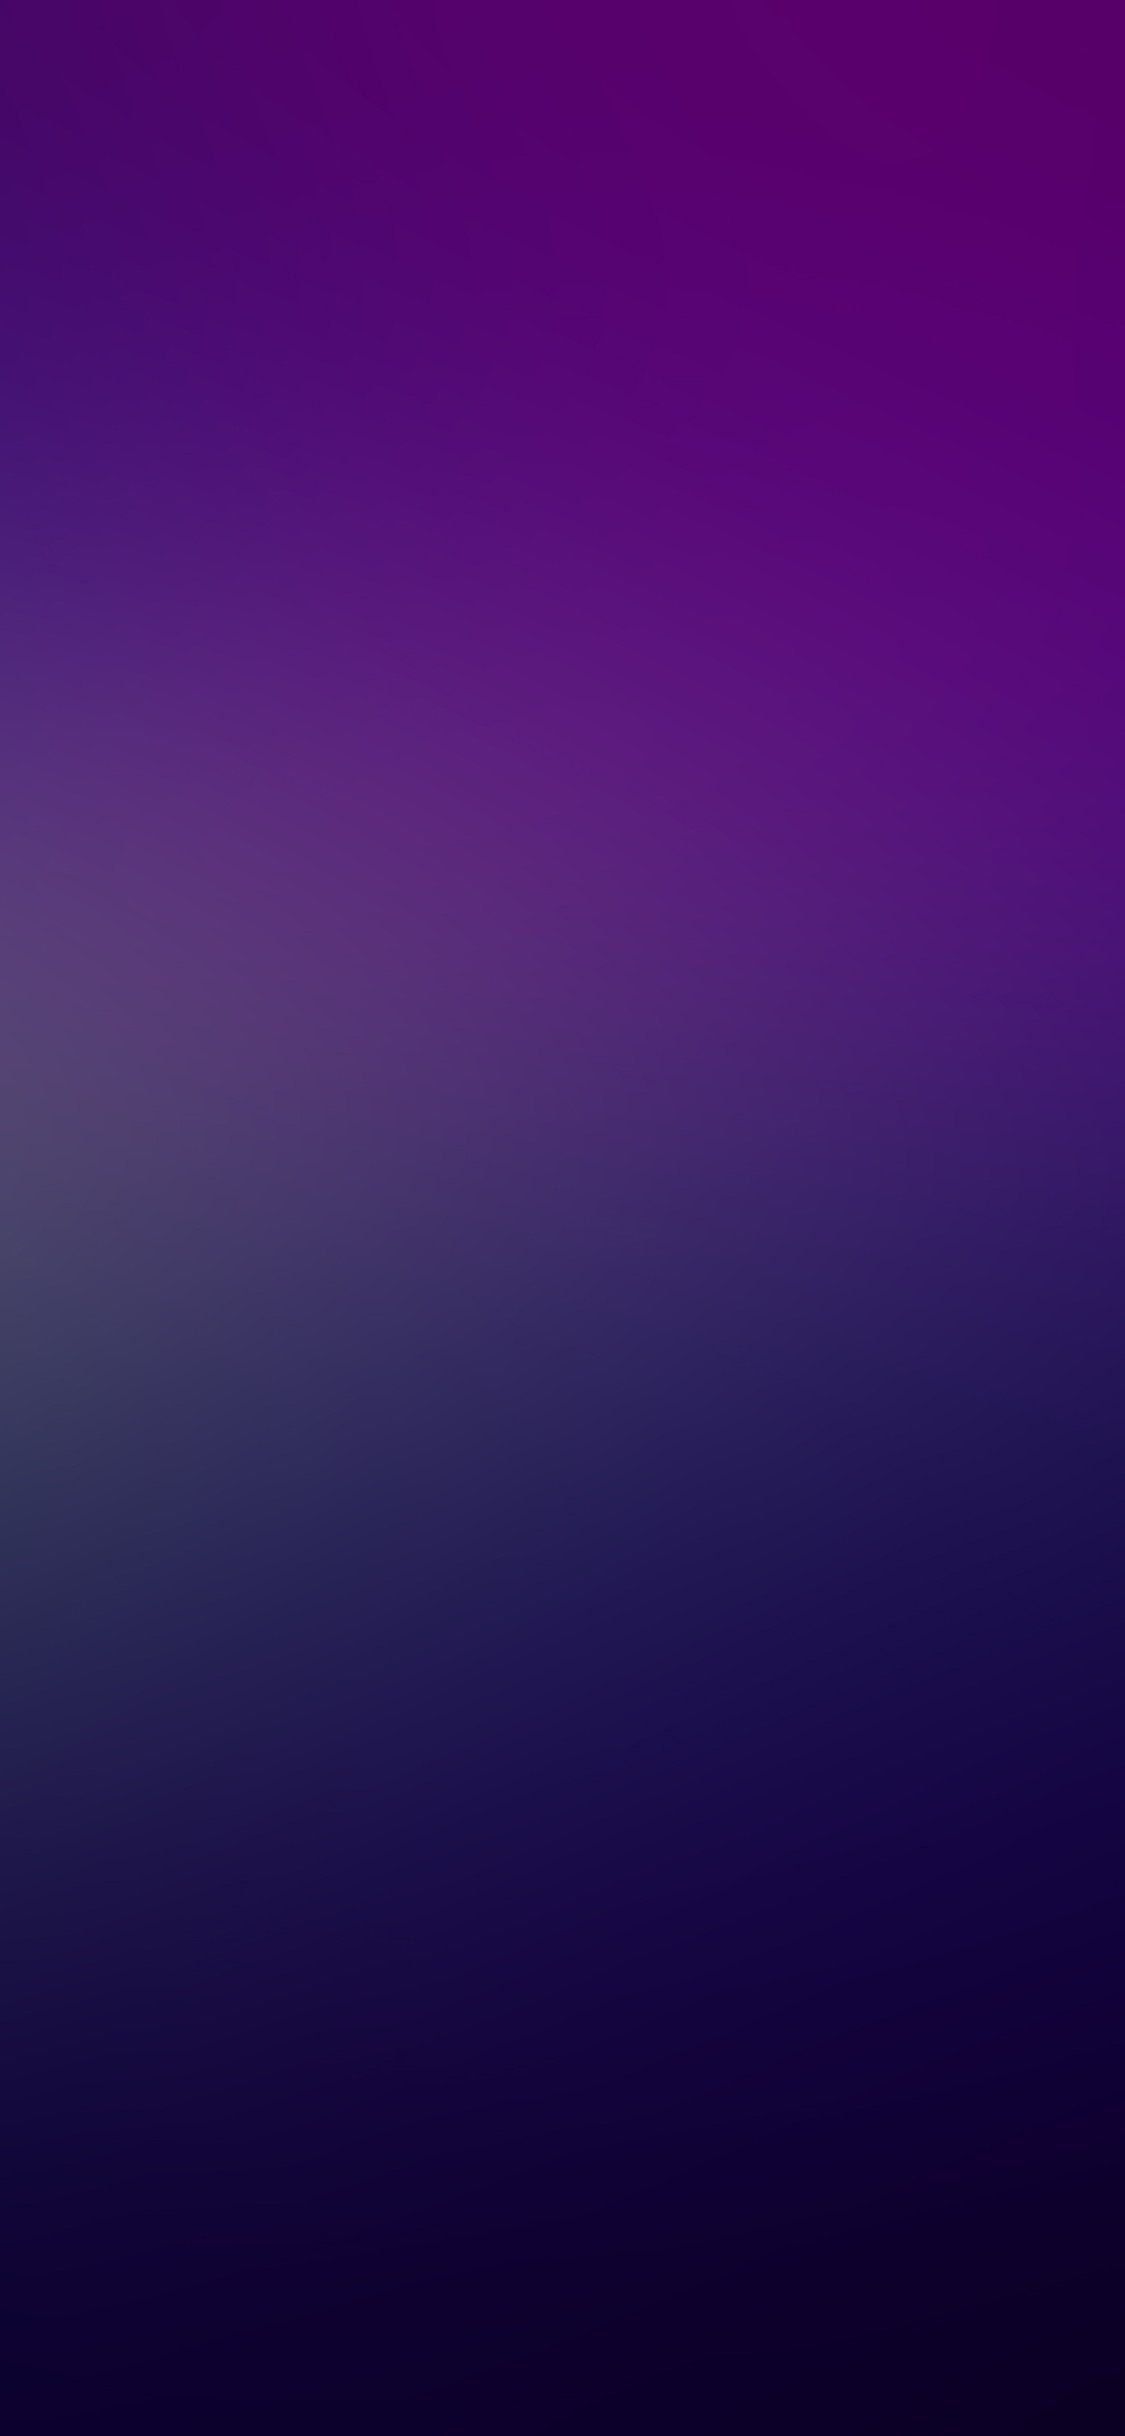 Plain Light Purple Wallpaper iPhone